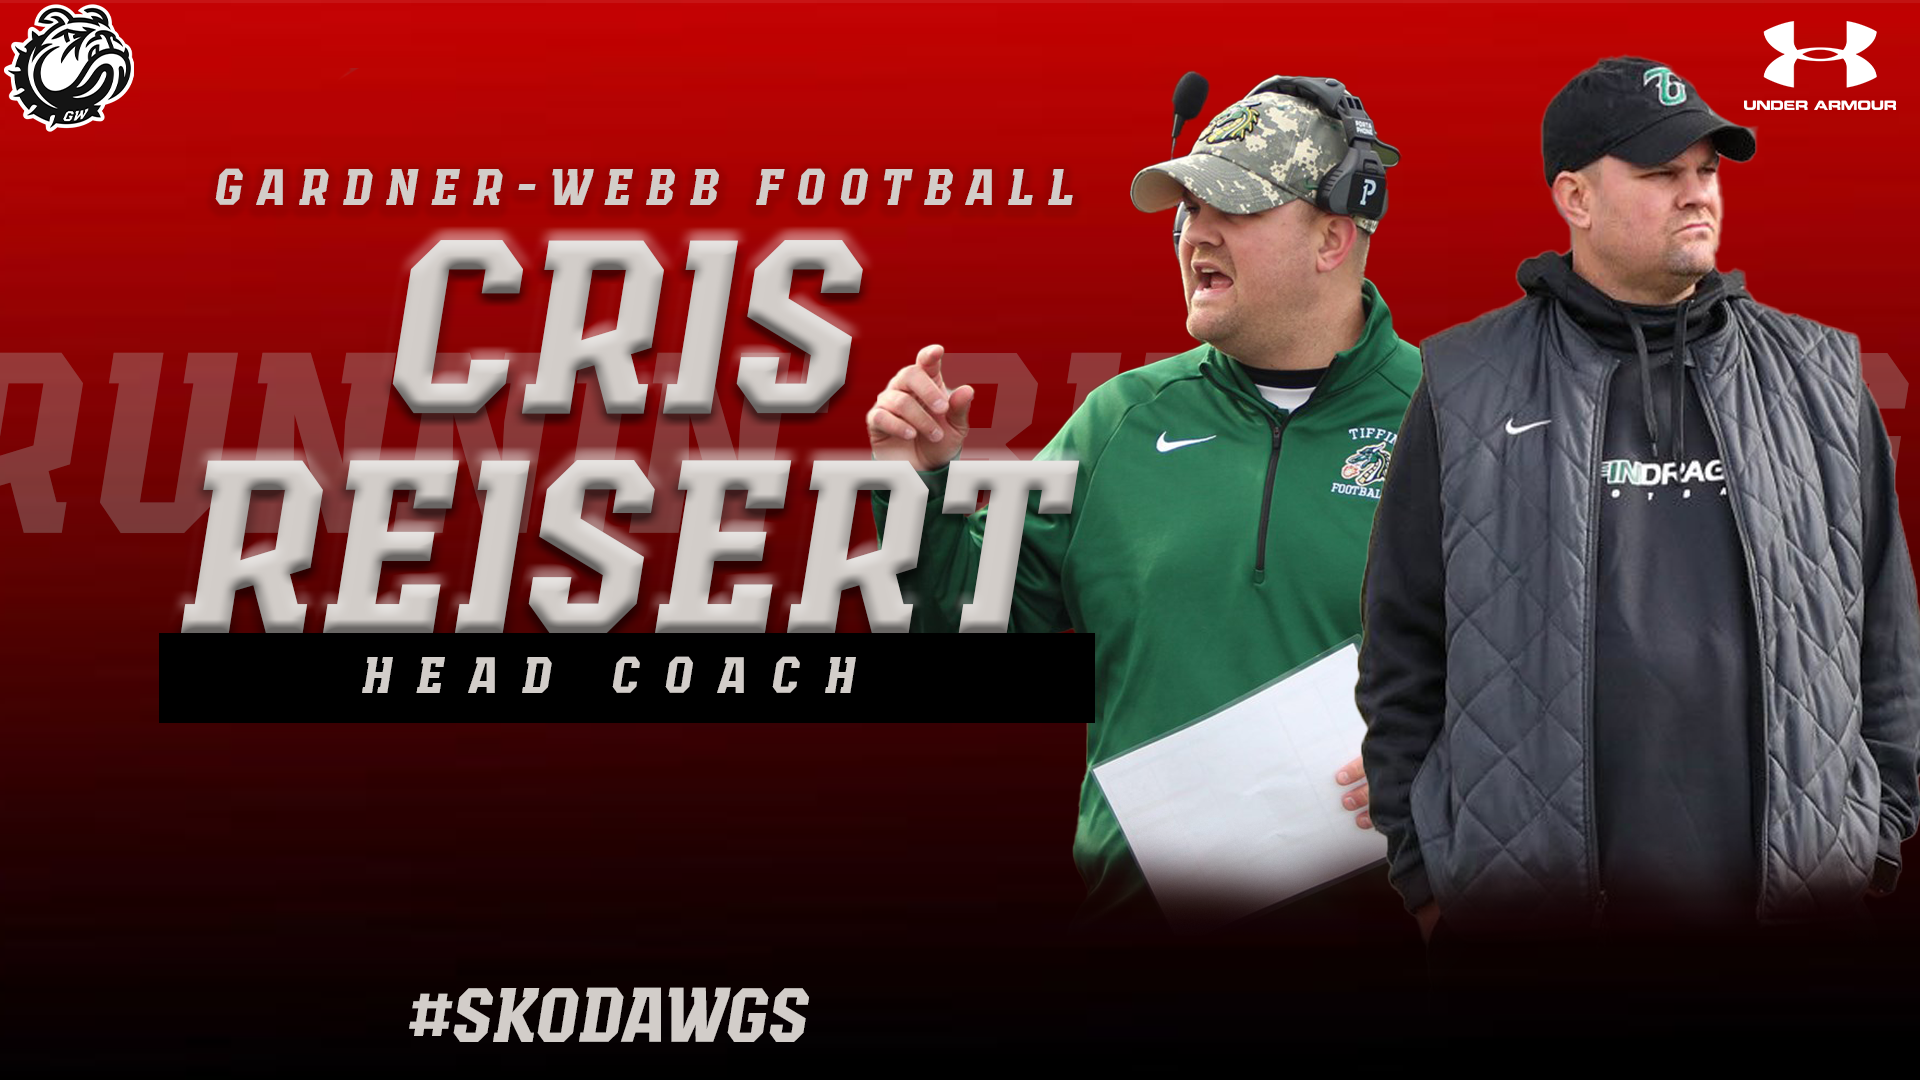 Gardner-Webb Introduces Cris Reisert As Next Head Football Coach